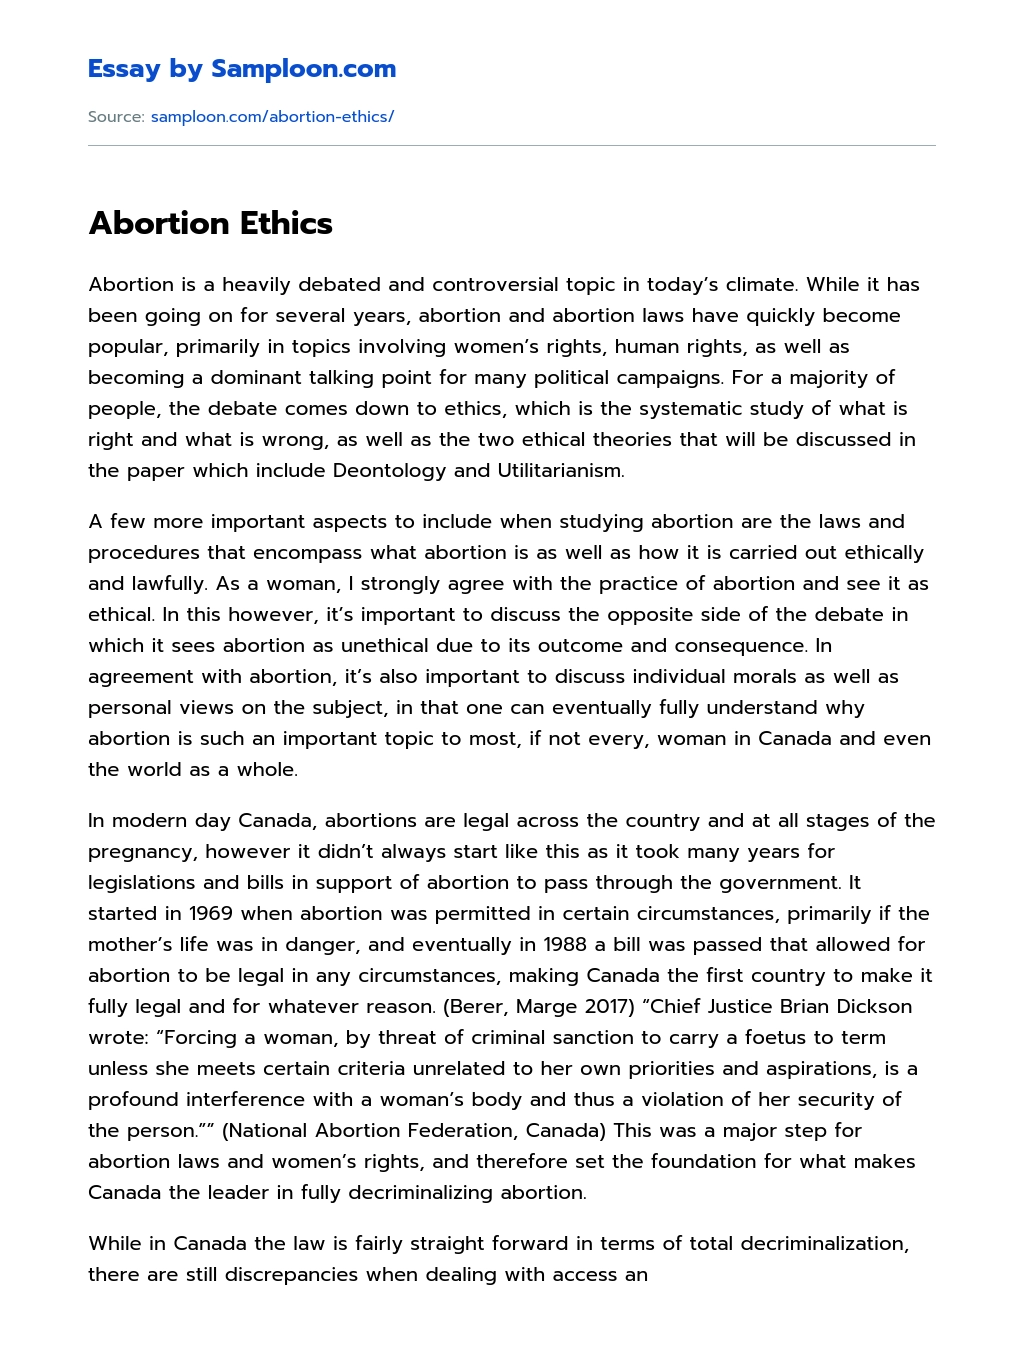 Abortion Ethics essay